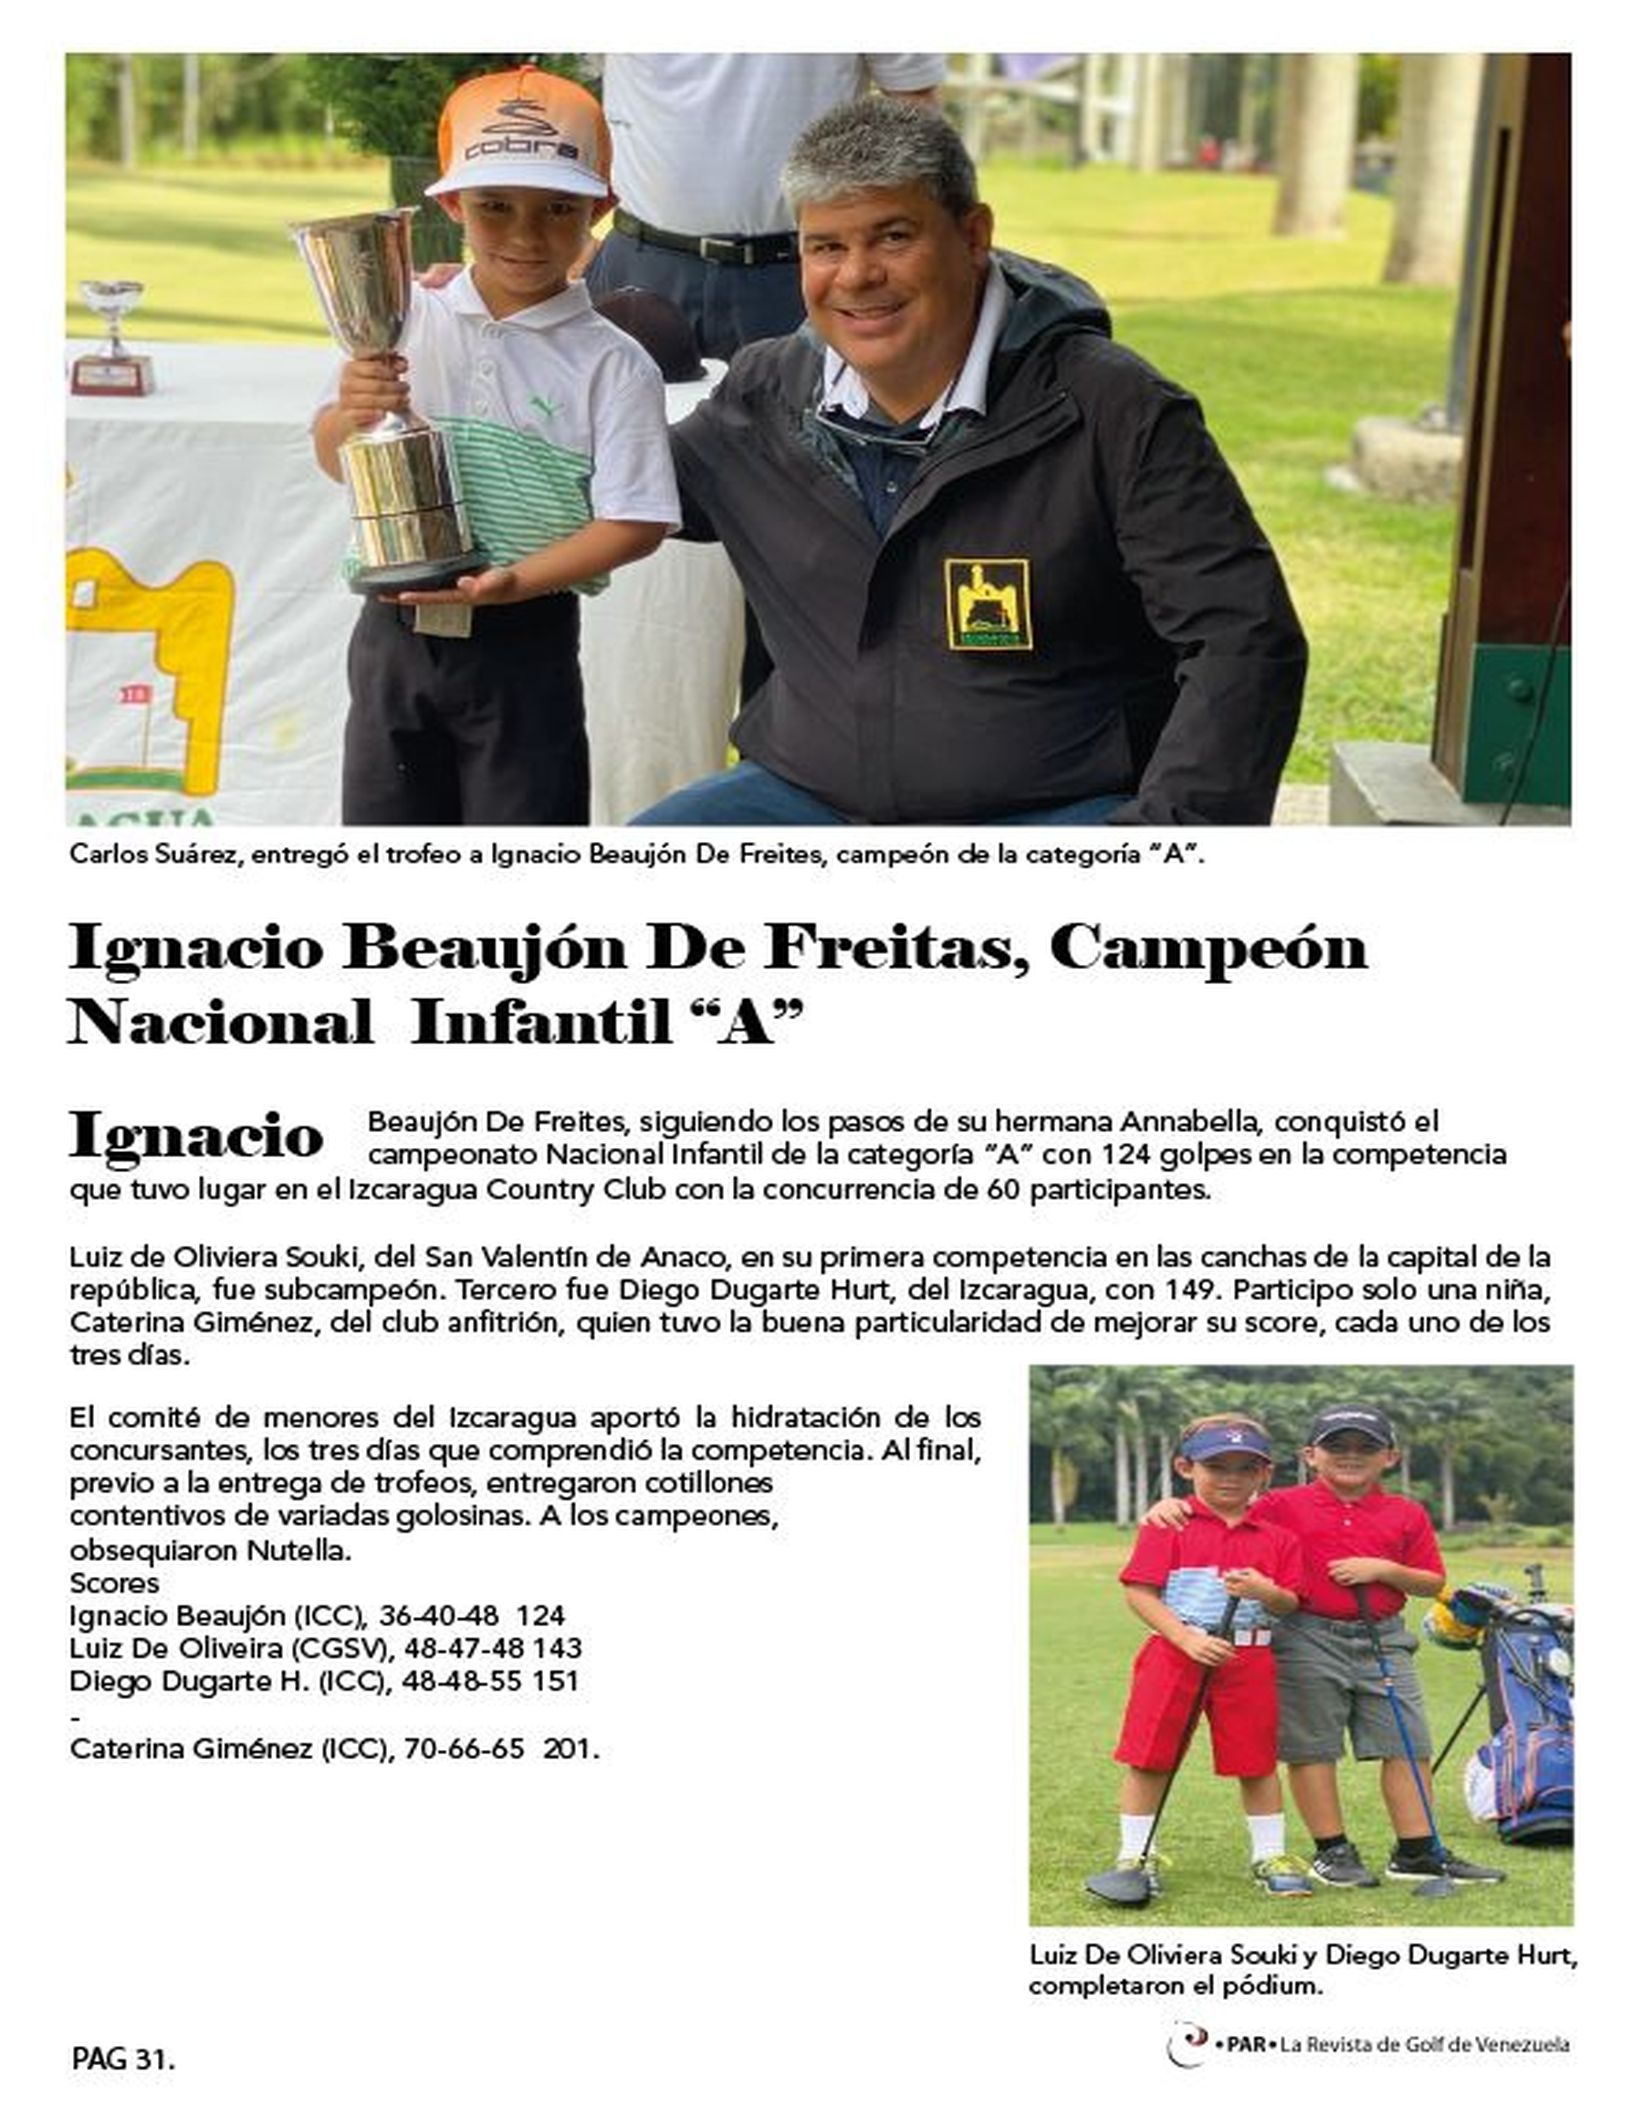 Ignacio Beaujon Campeón Nacional Infantil